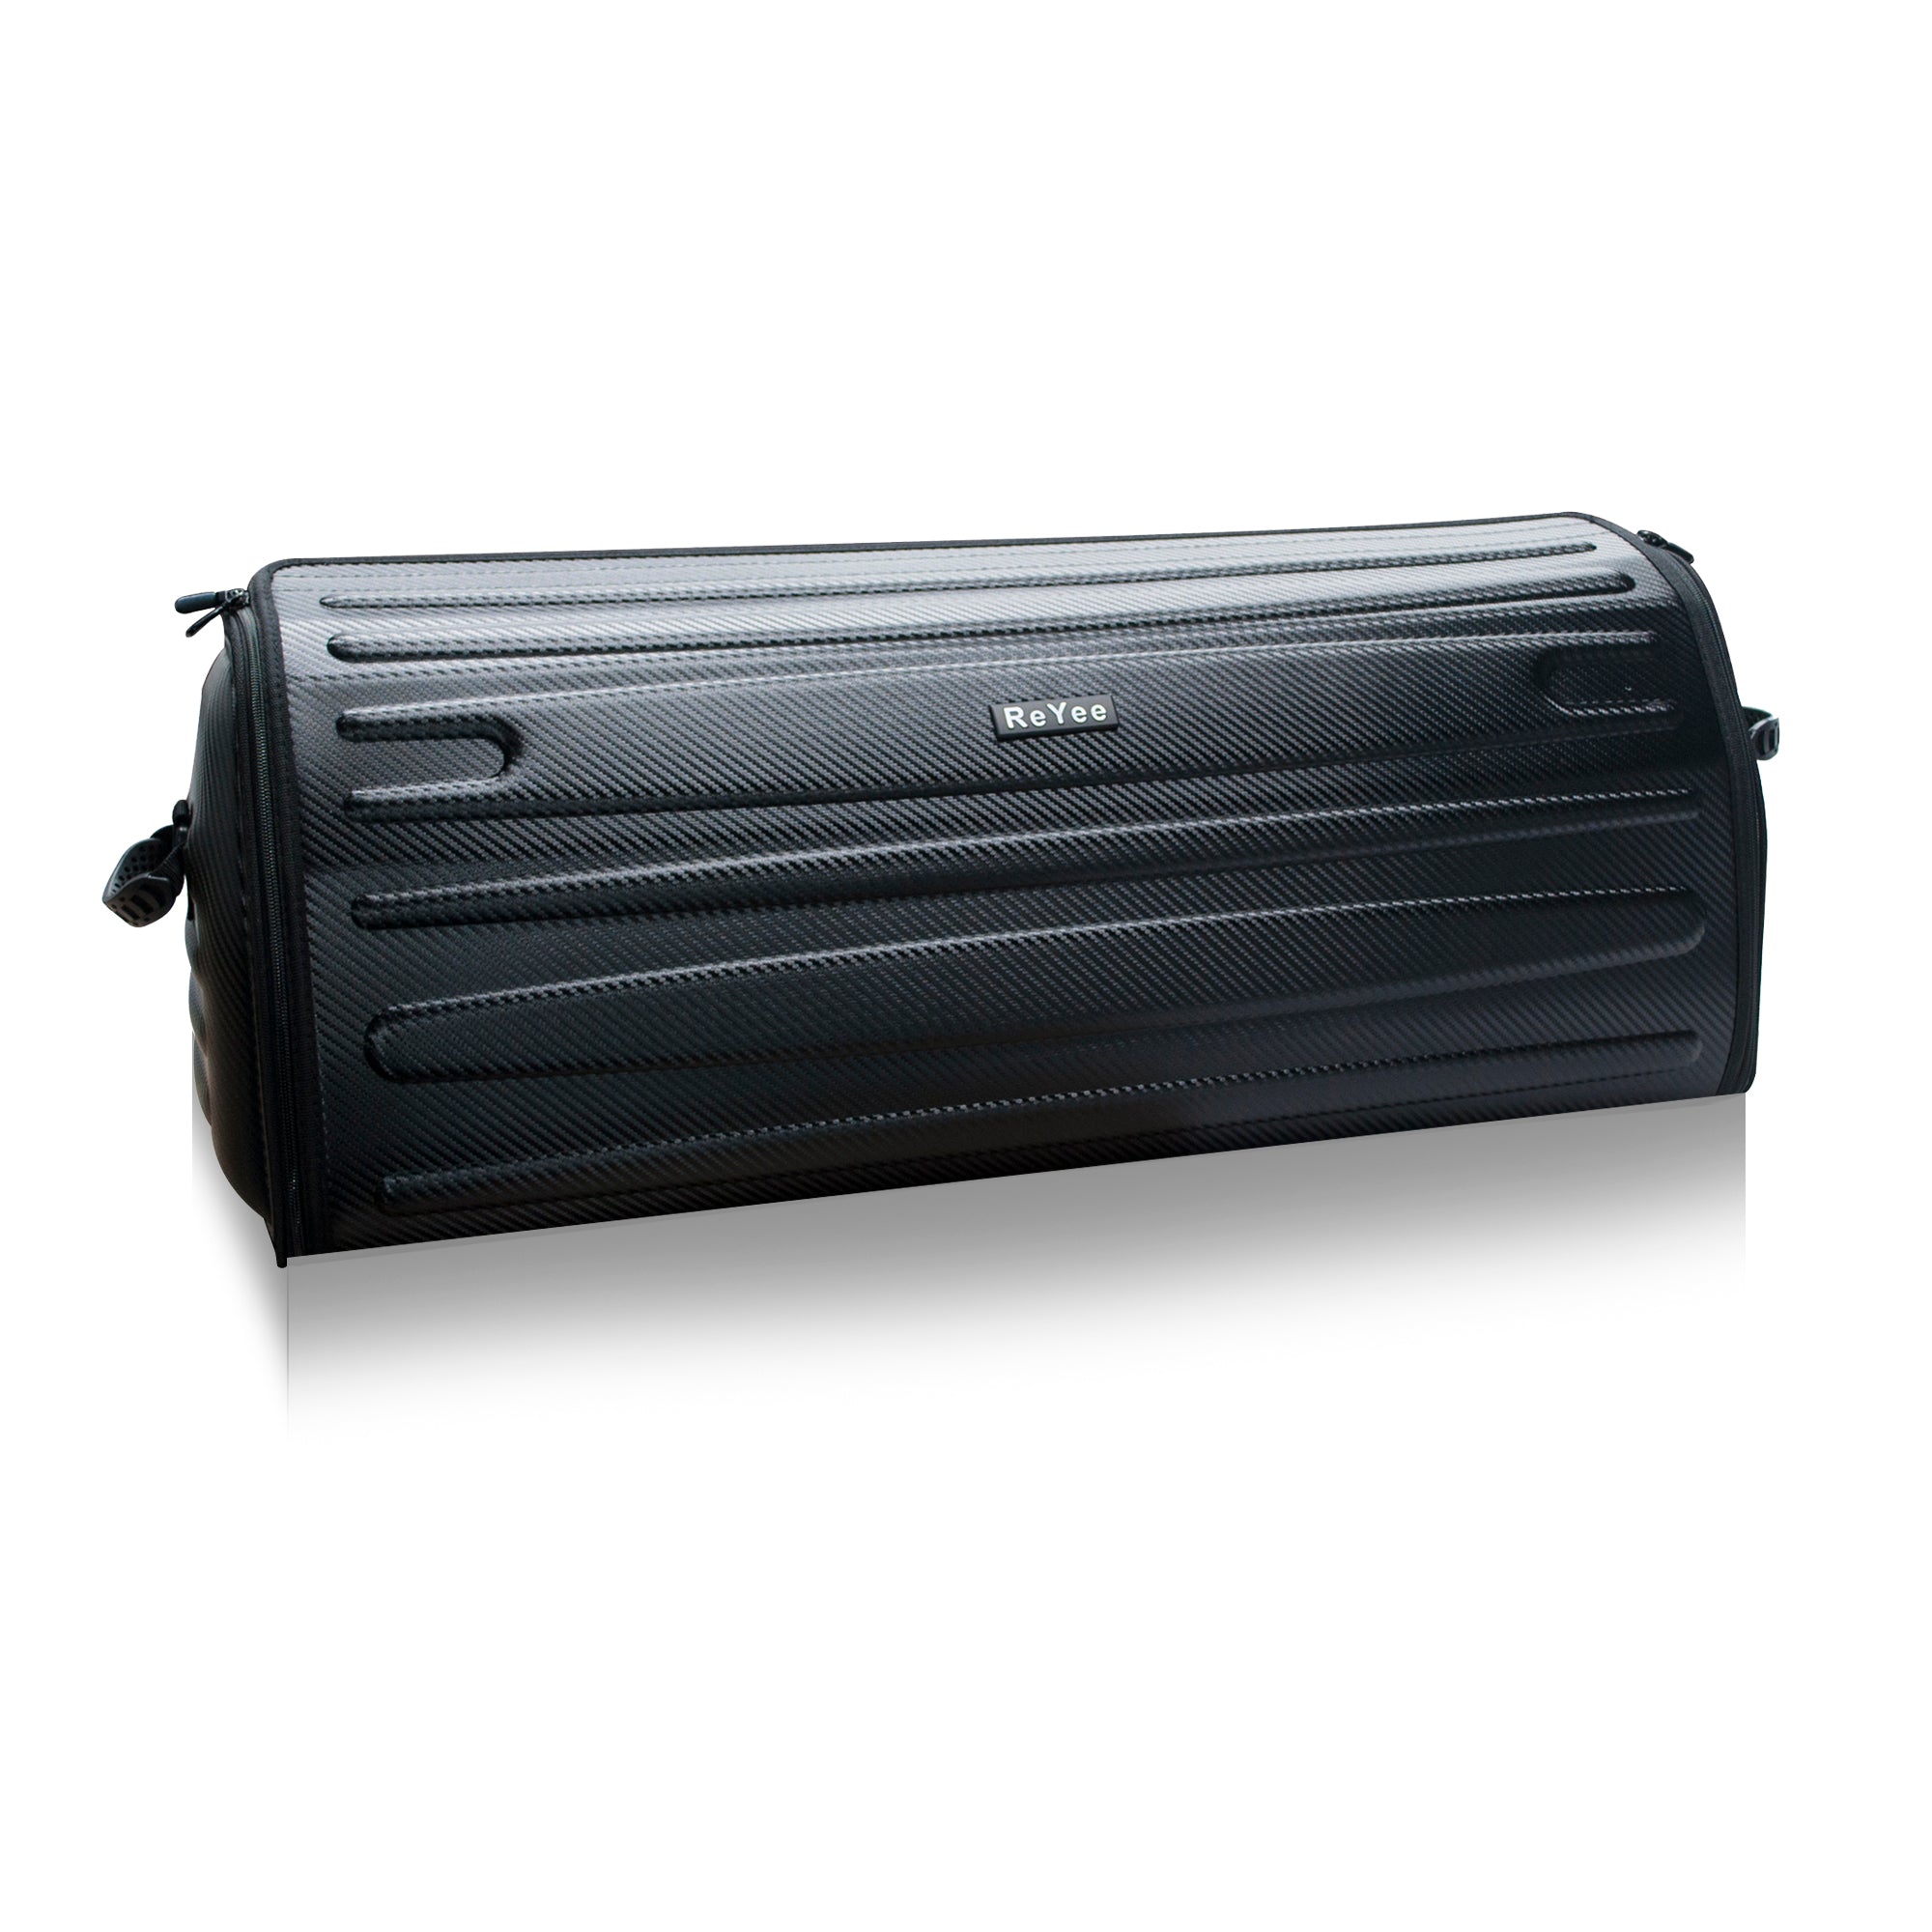 Car Trunk Organizer, Carbon fiber storage box waterproof and